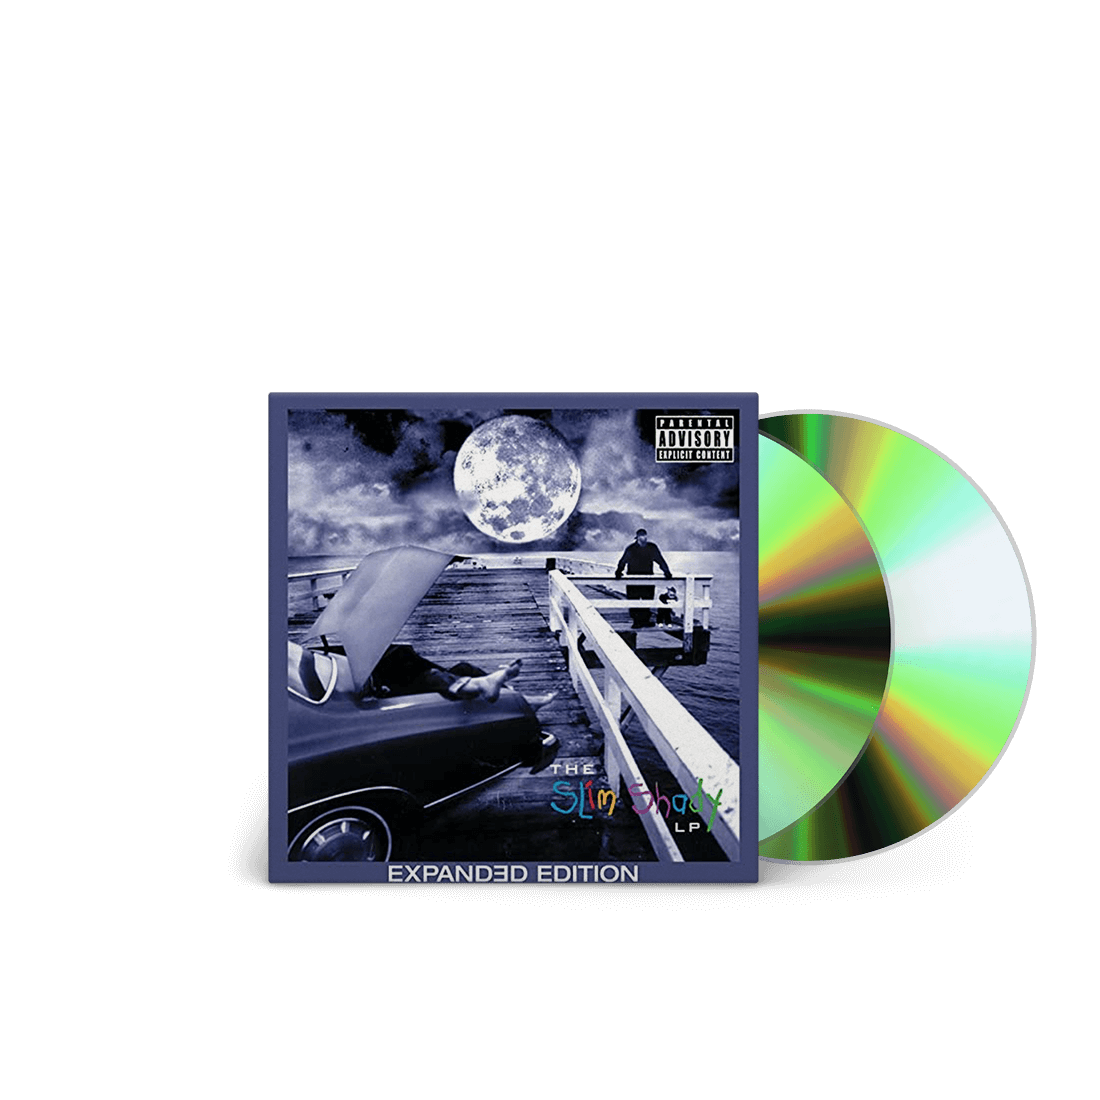 Eminem - The Slim Shady LP (Expanded Edition): 2CD